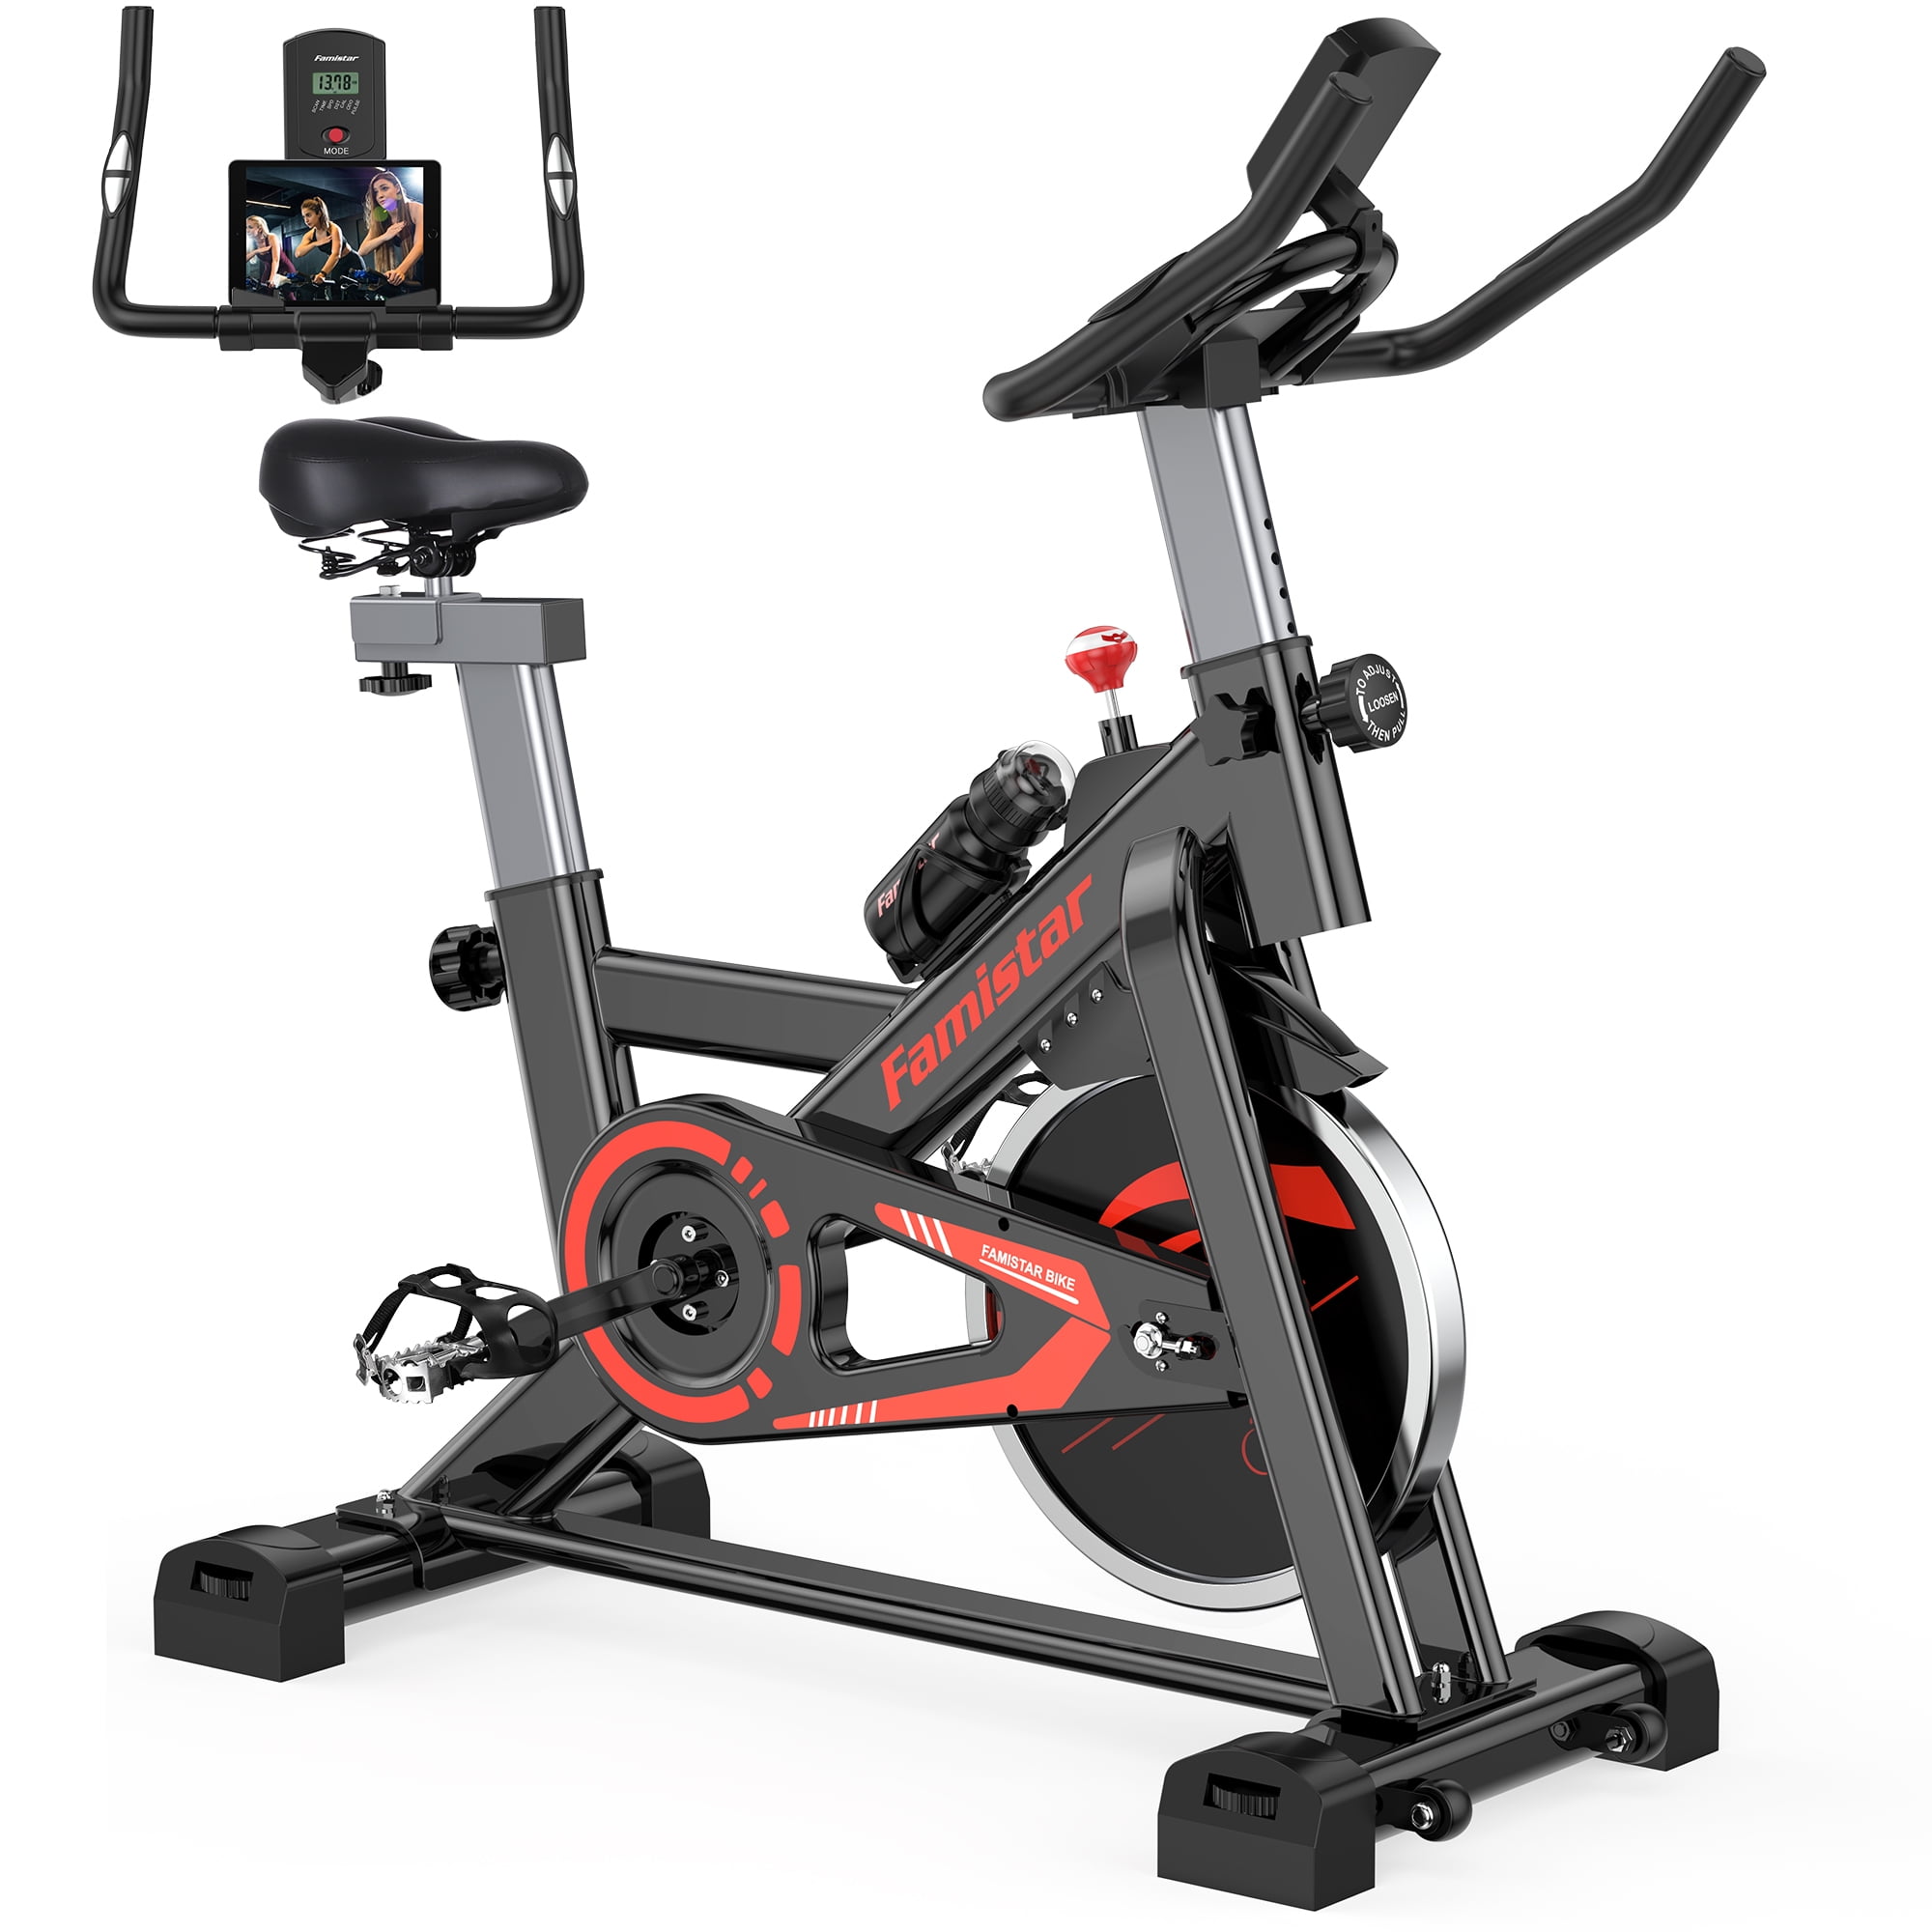 LED Display Exercise Spinning Bike Cardio Fitness Workout Adjustable Resistance 